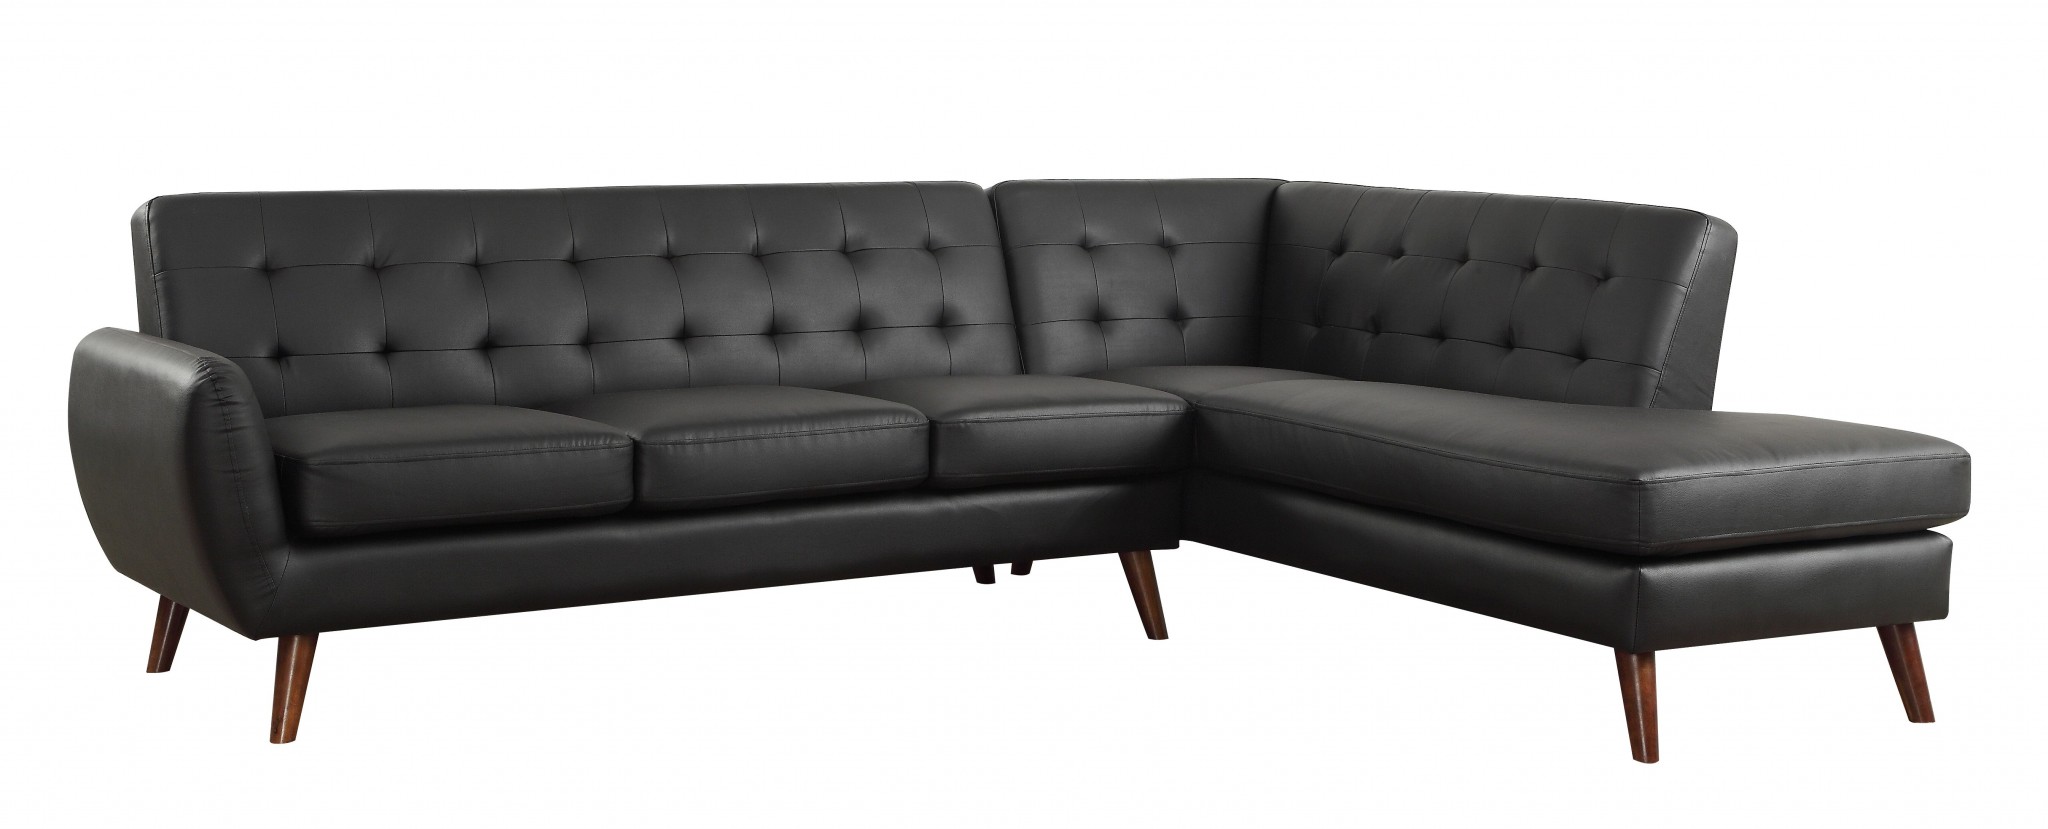 111" X 80" X 33" Black PU Sectional Sofa